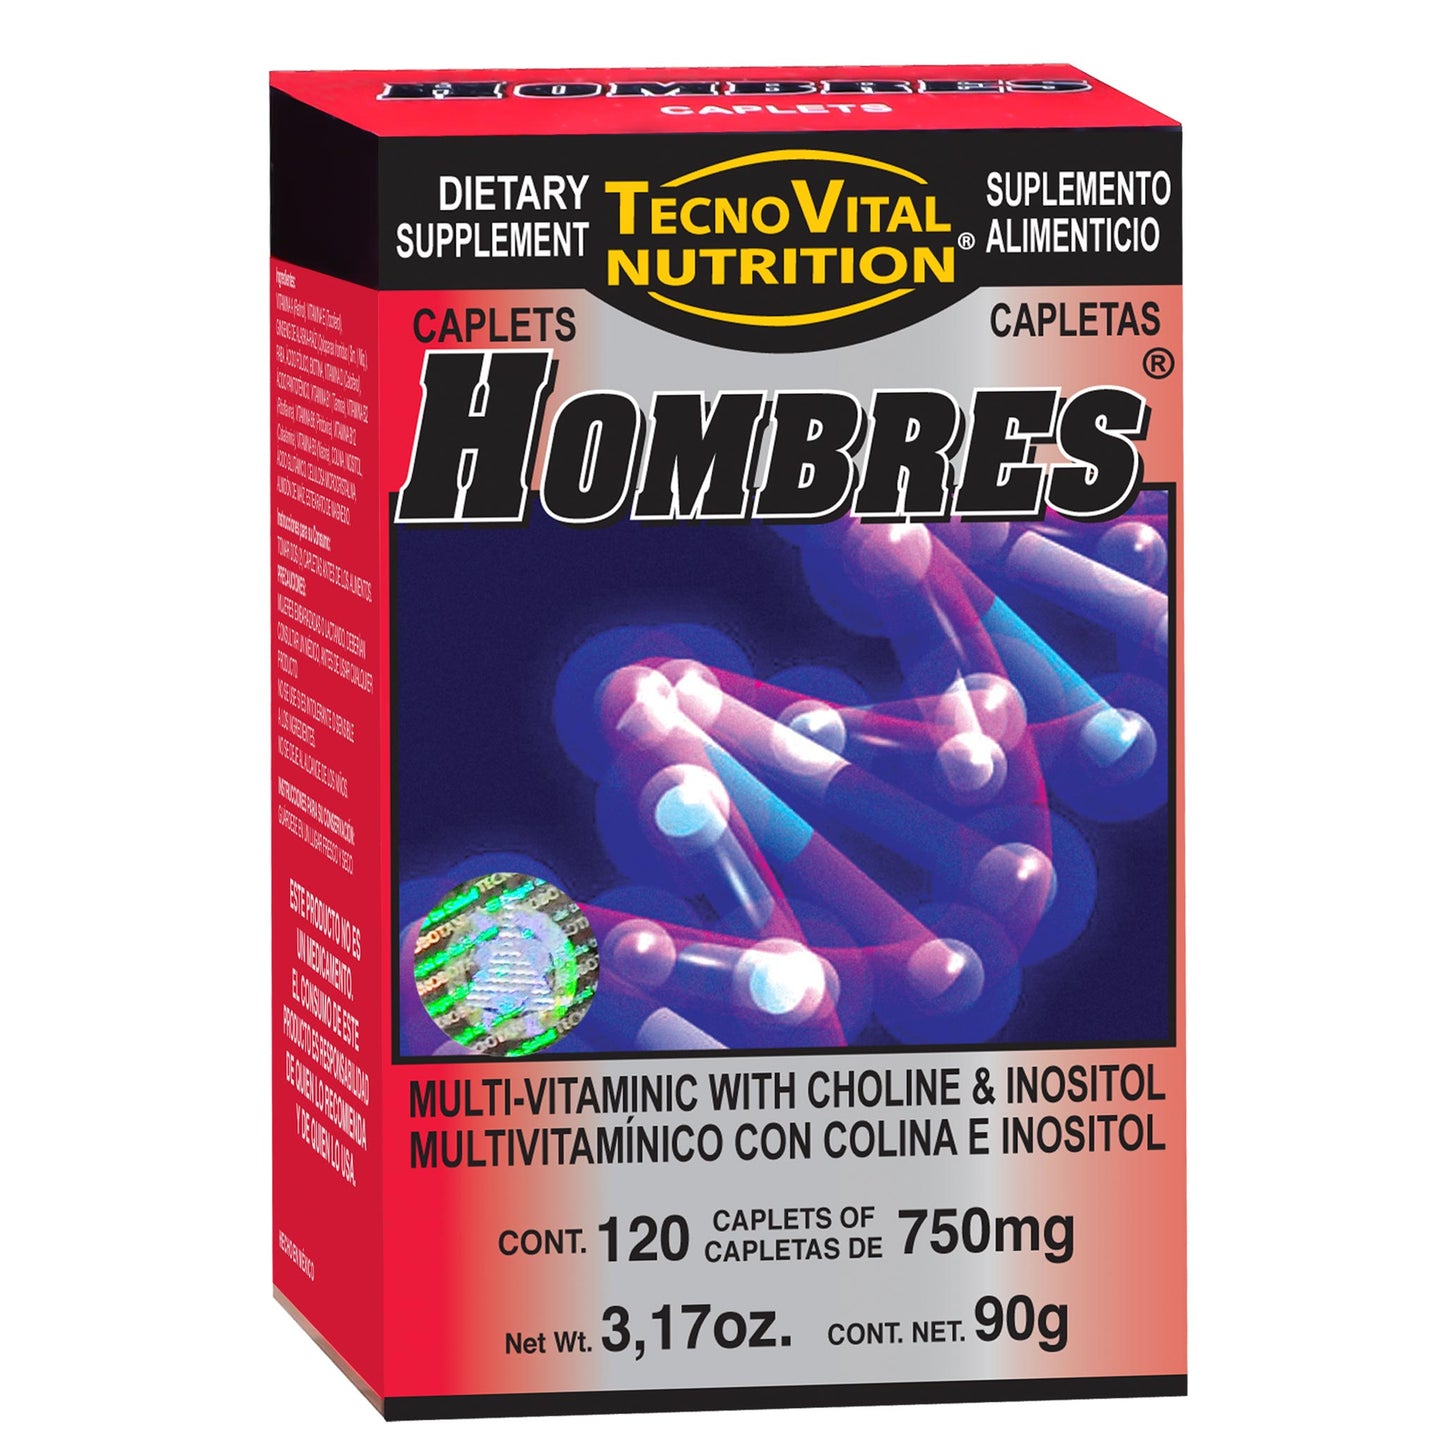 HOMBRES ® 120 capletas